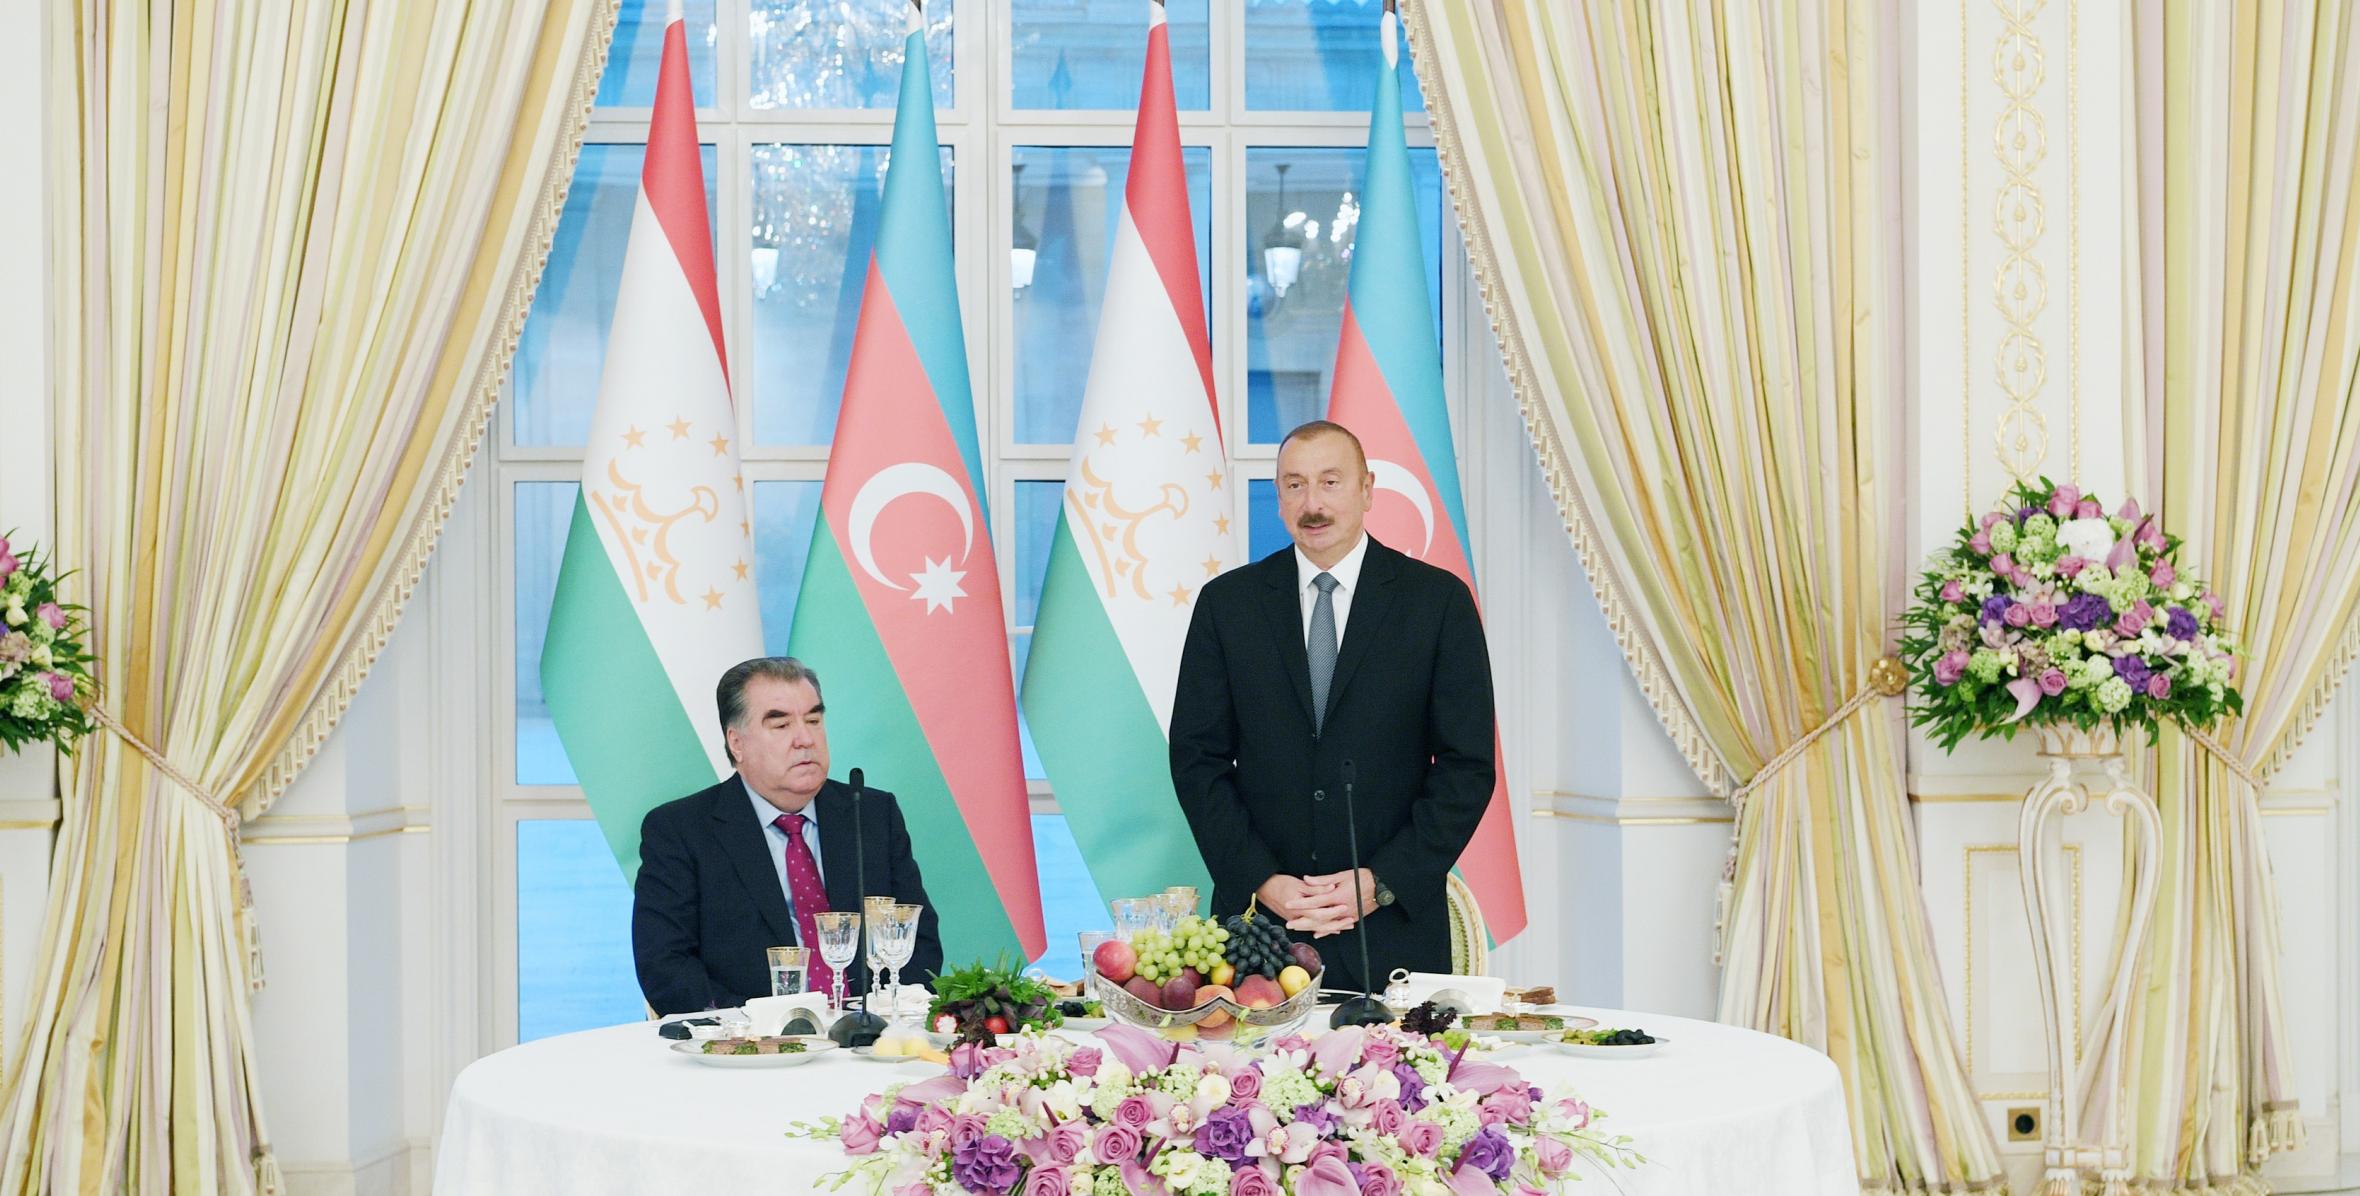 Ilham Aliyev hosted official reception in honor of Tajik President Emomali Rahmon